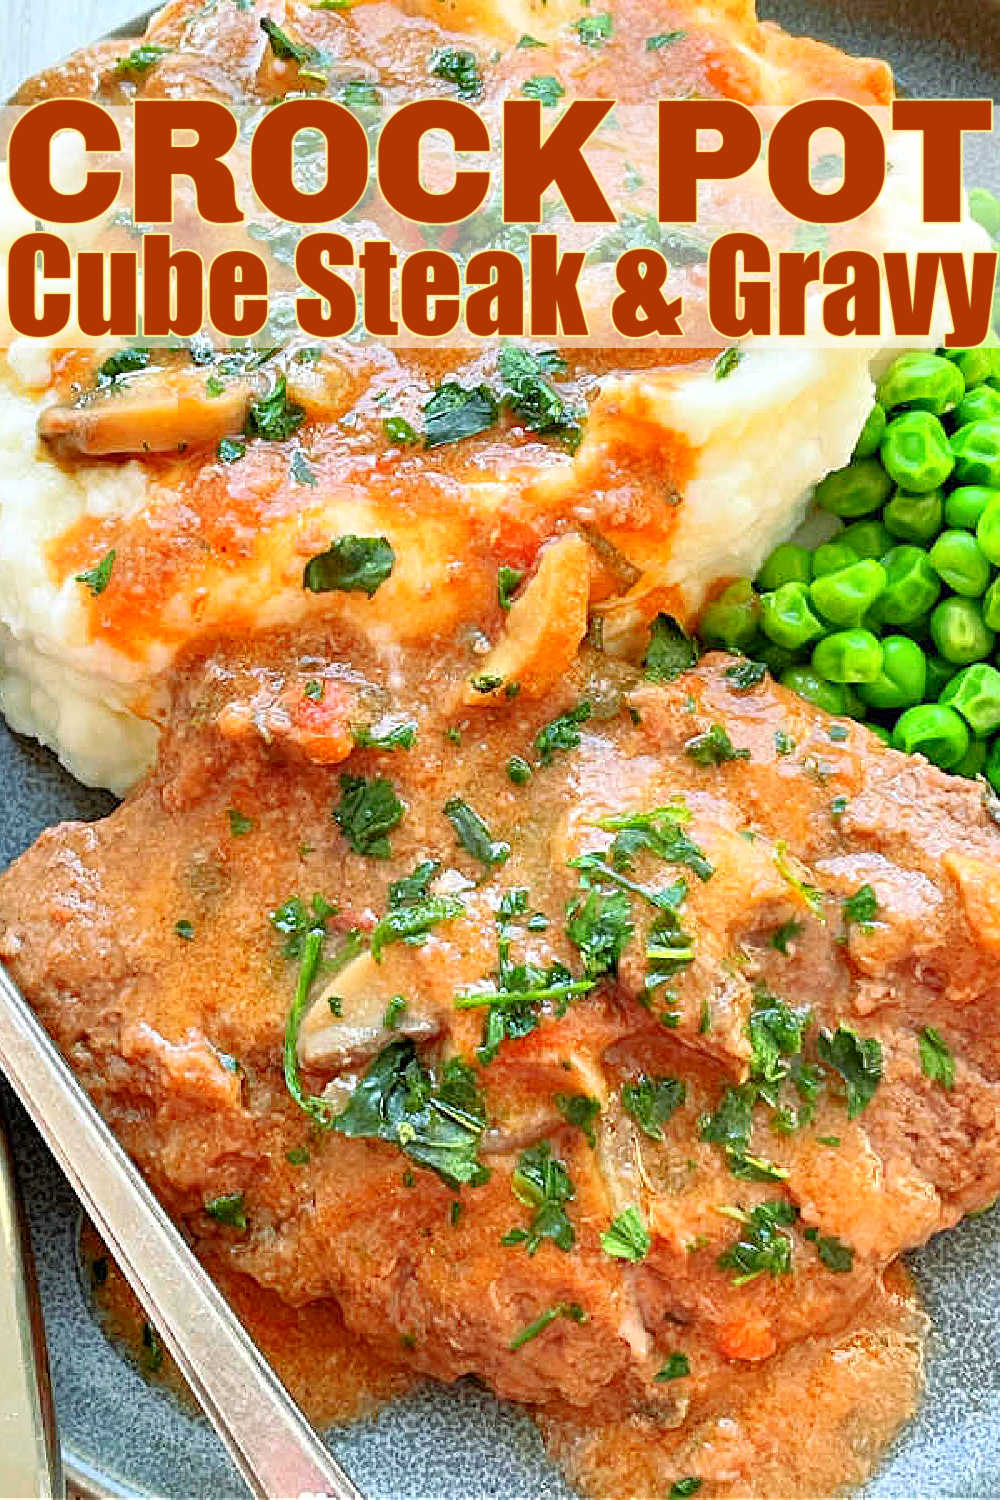 Crock Pot Cube Steak | Foodtastic Mom #crockpotrecipes #slowcookerrecipes #crockpotcubesteak #cubesteak #cubedsteak